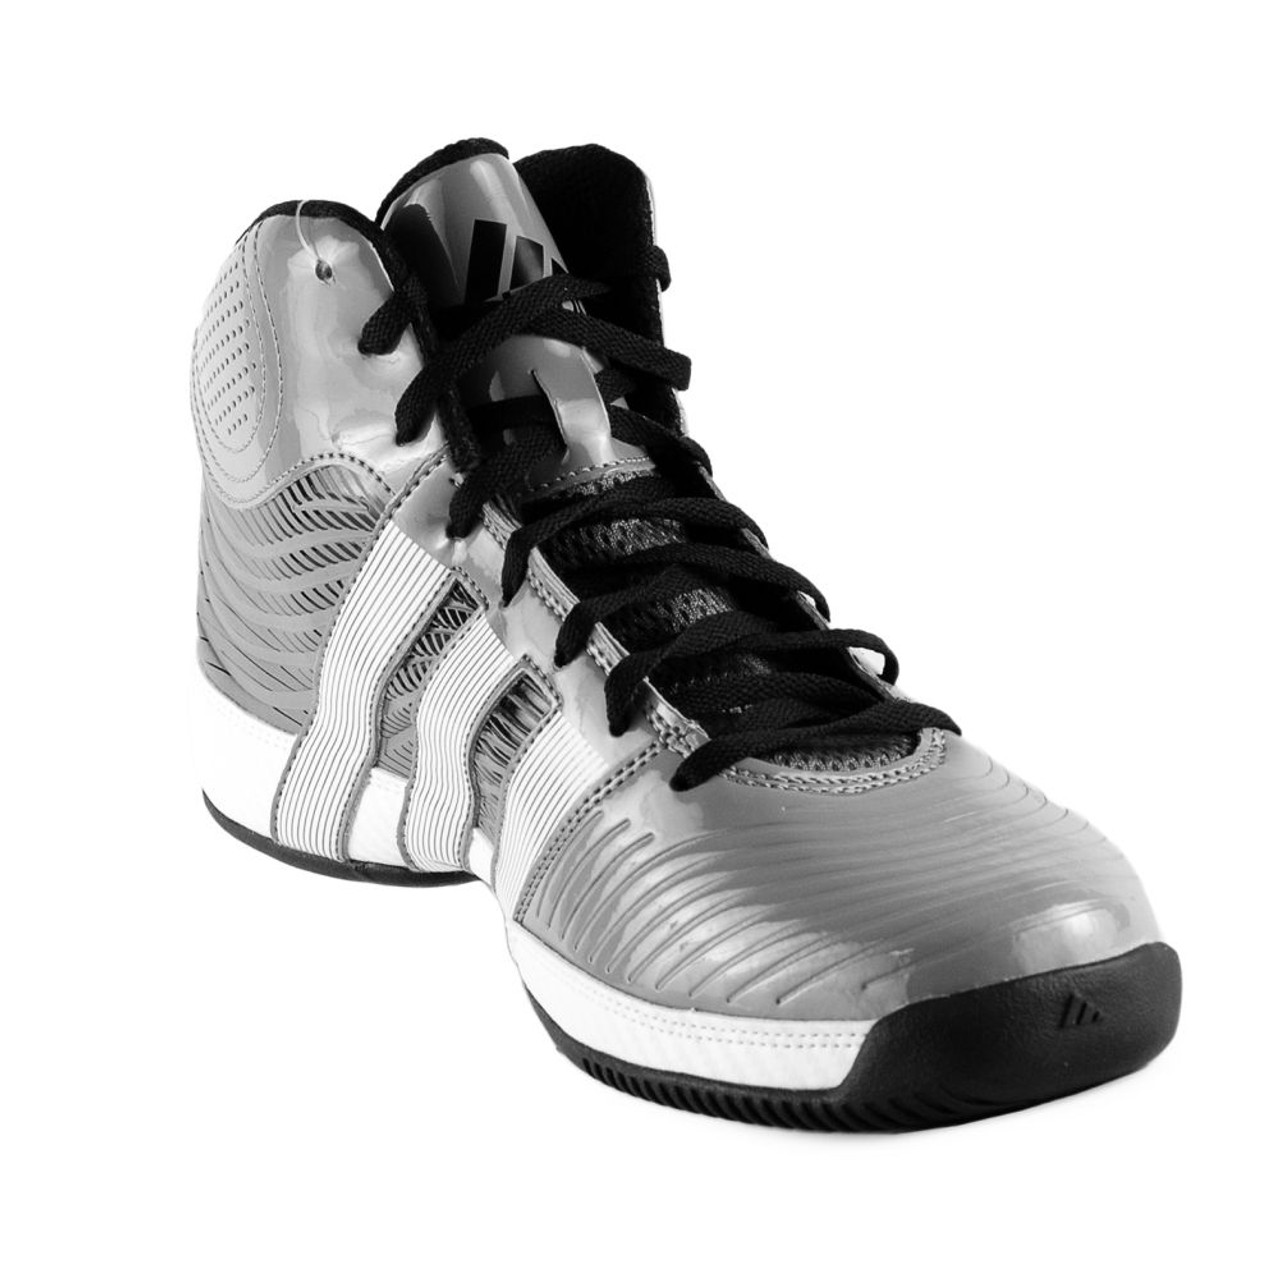 Adidas Commander TD 4 Grey/White/Black Mens Shoes - Grey/White/Black | Discount Adidas Men's Athletic Shoes & More - |